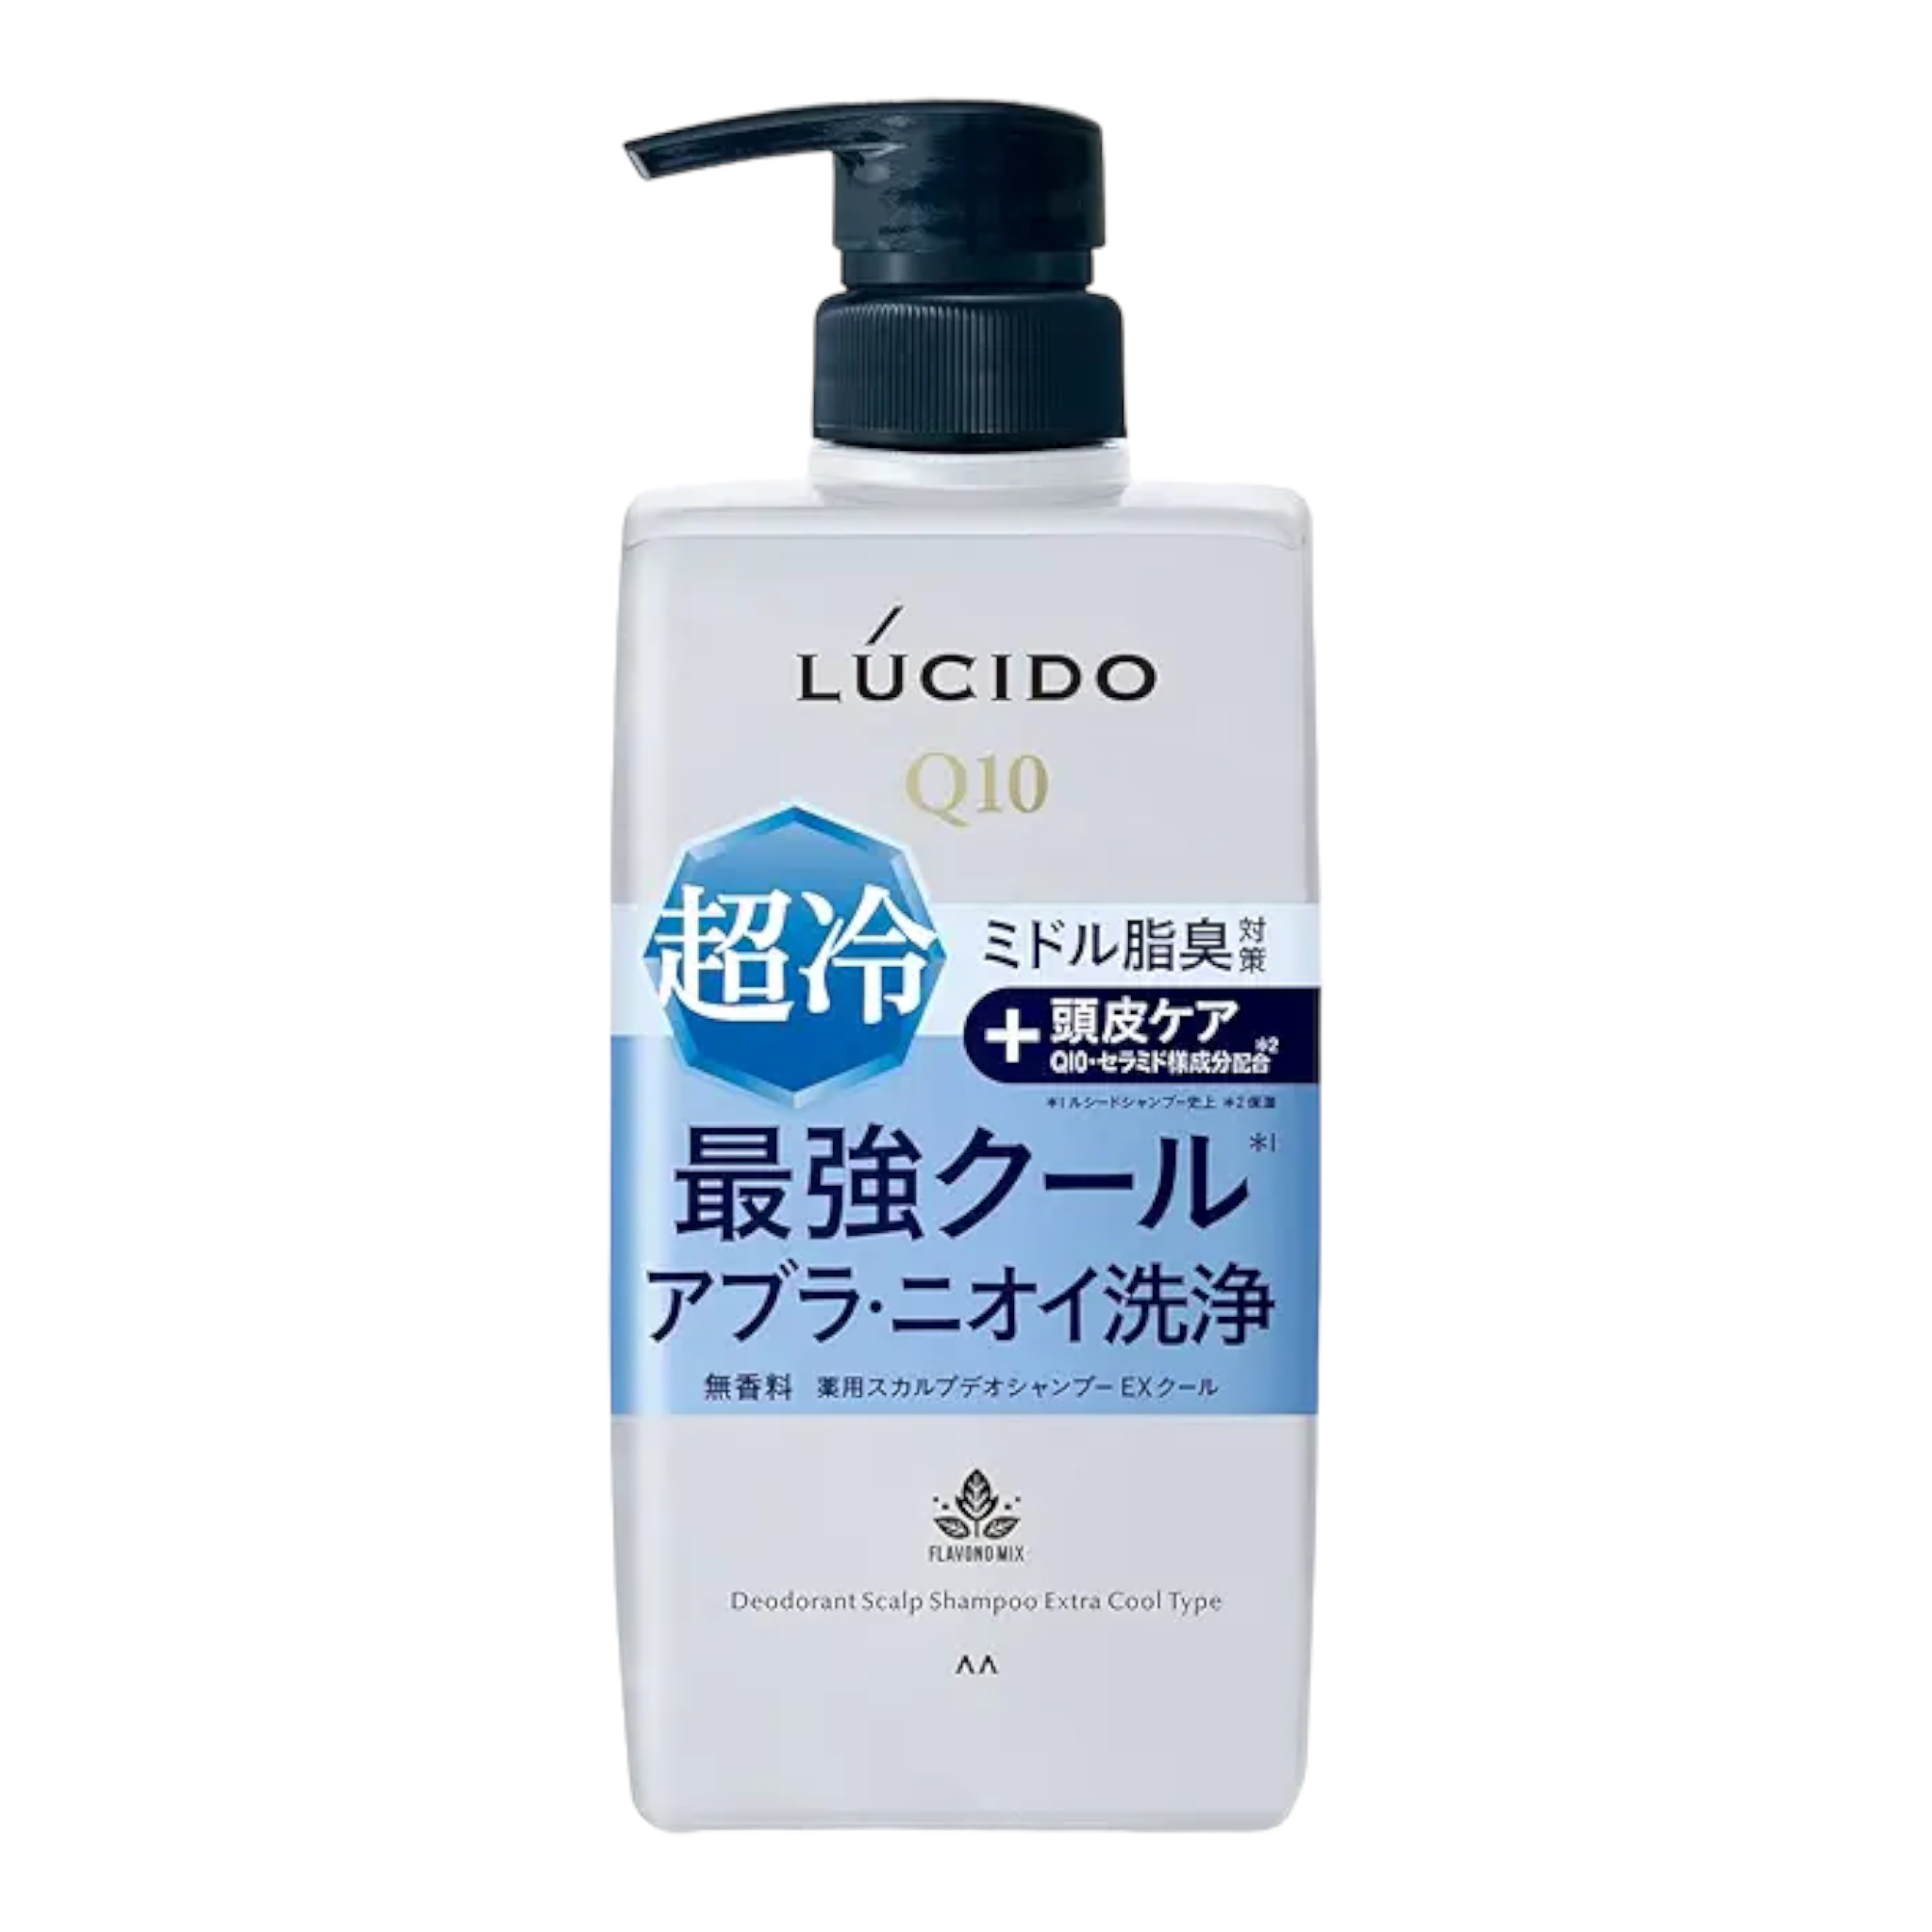 LUCIDO(ルシード) 【医薬部外品】 薬用スカルプデオシャンプー EXクールタイプ